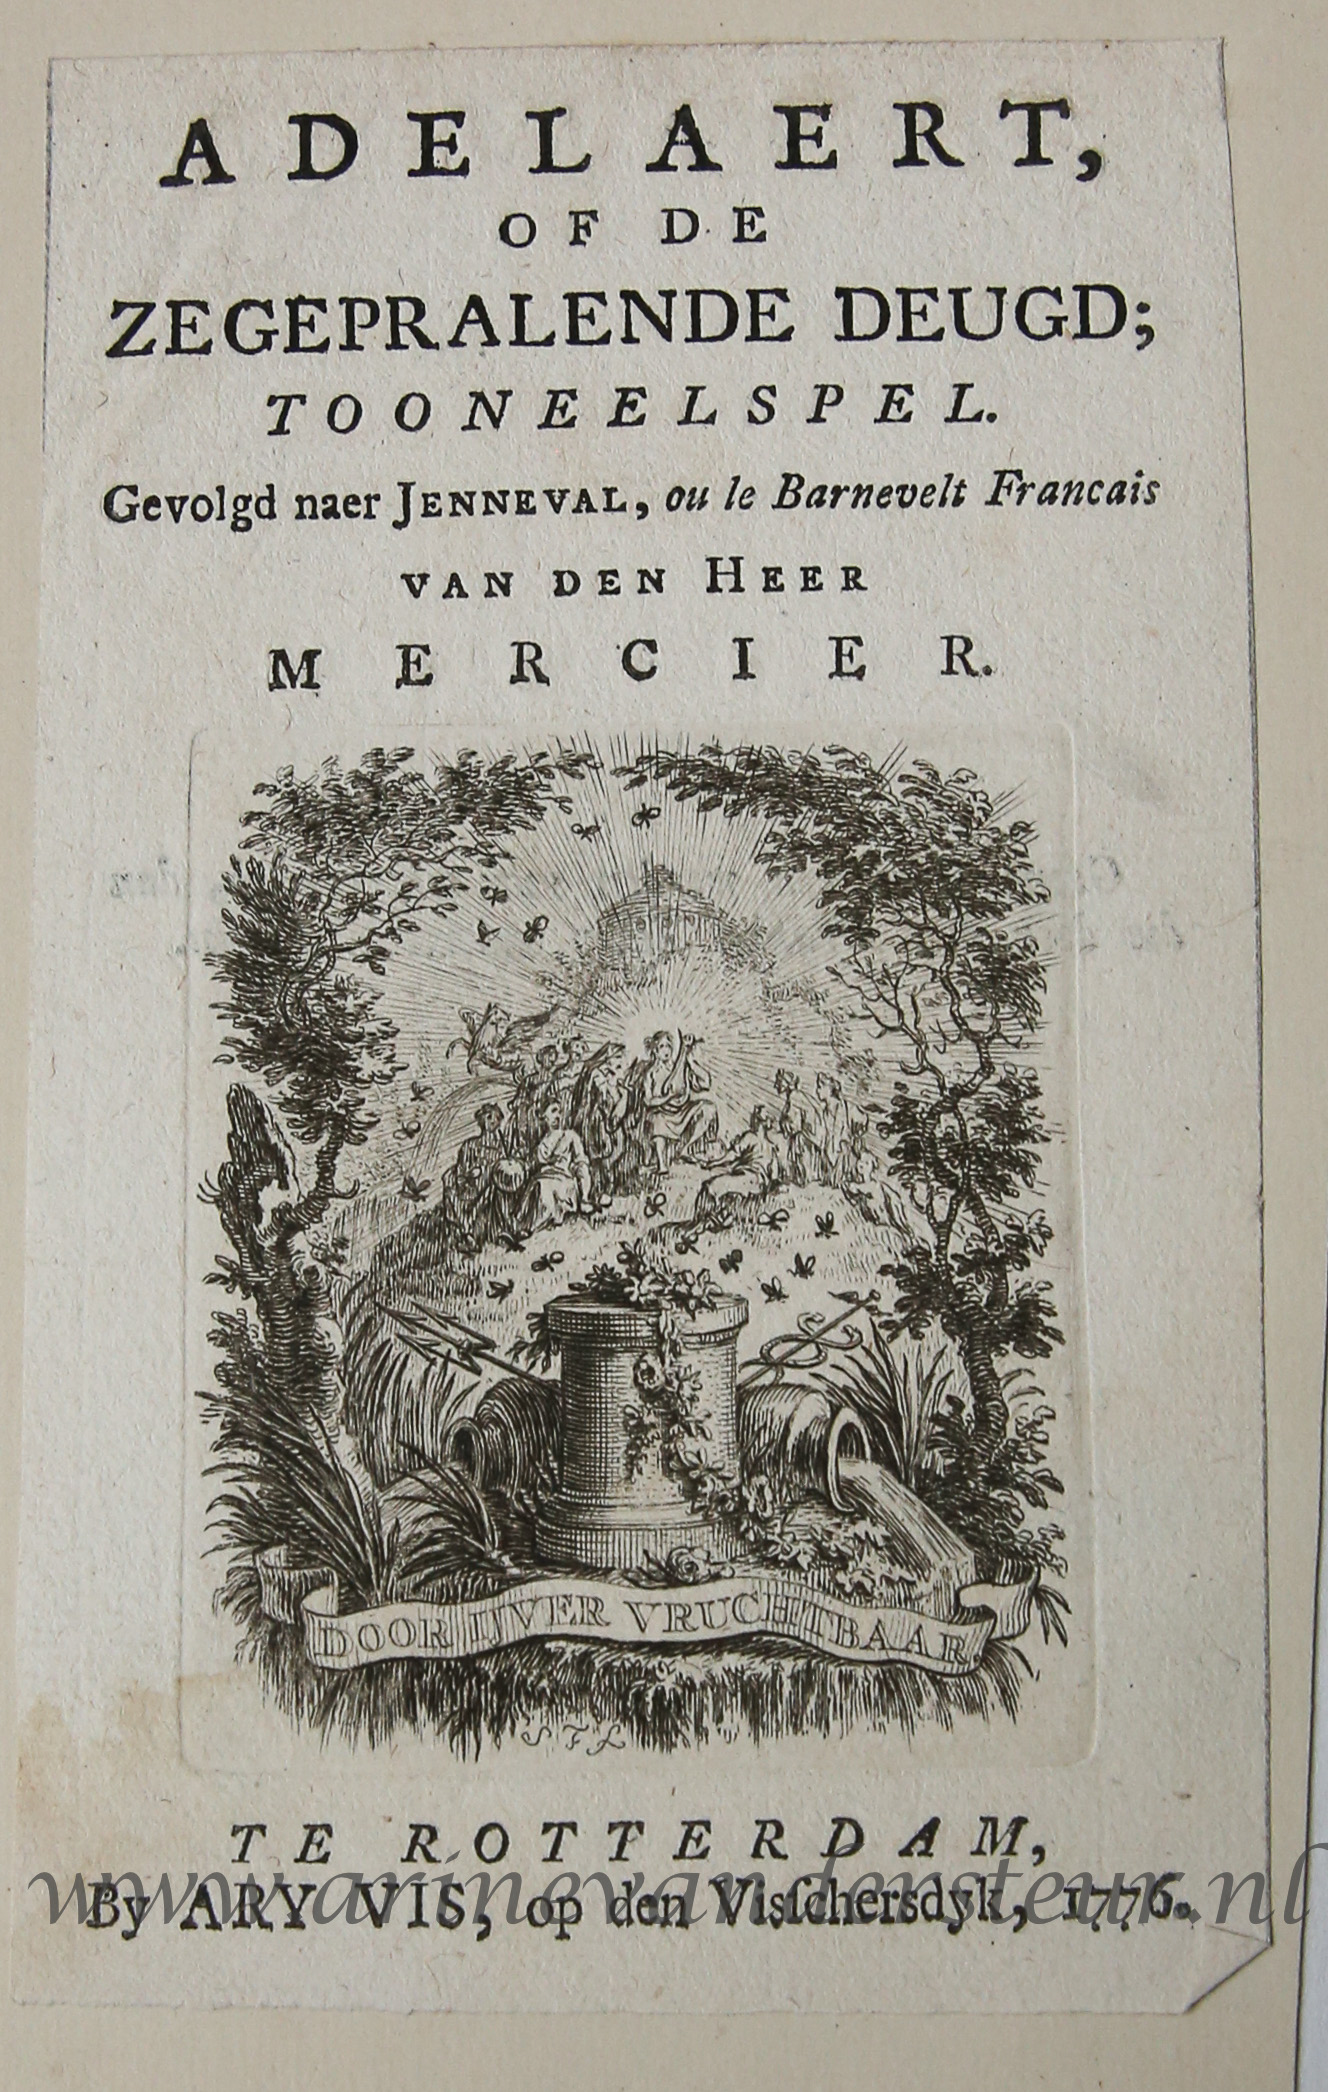 [Antique title page, 1776] ADELAERT OF DE ZEGEPRALENDE DEUGD, published 1776, 1 p.